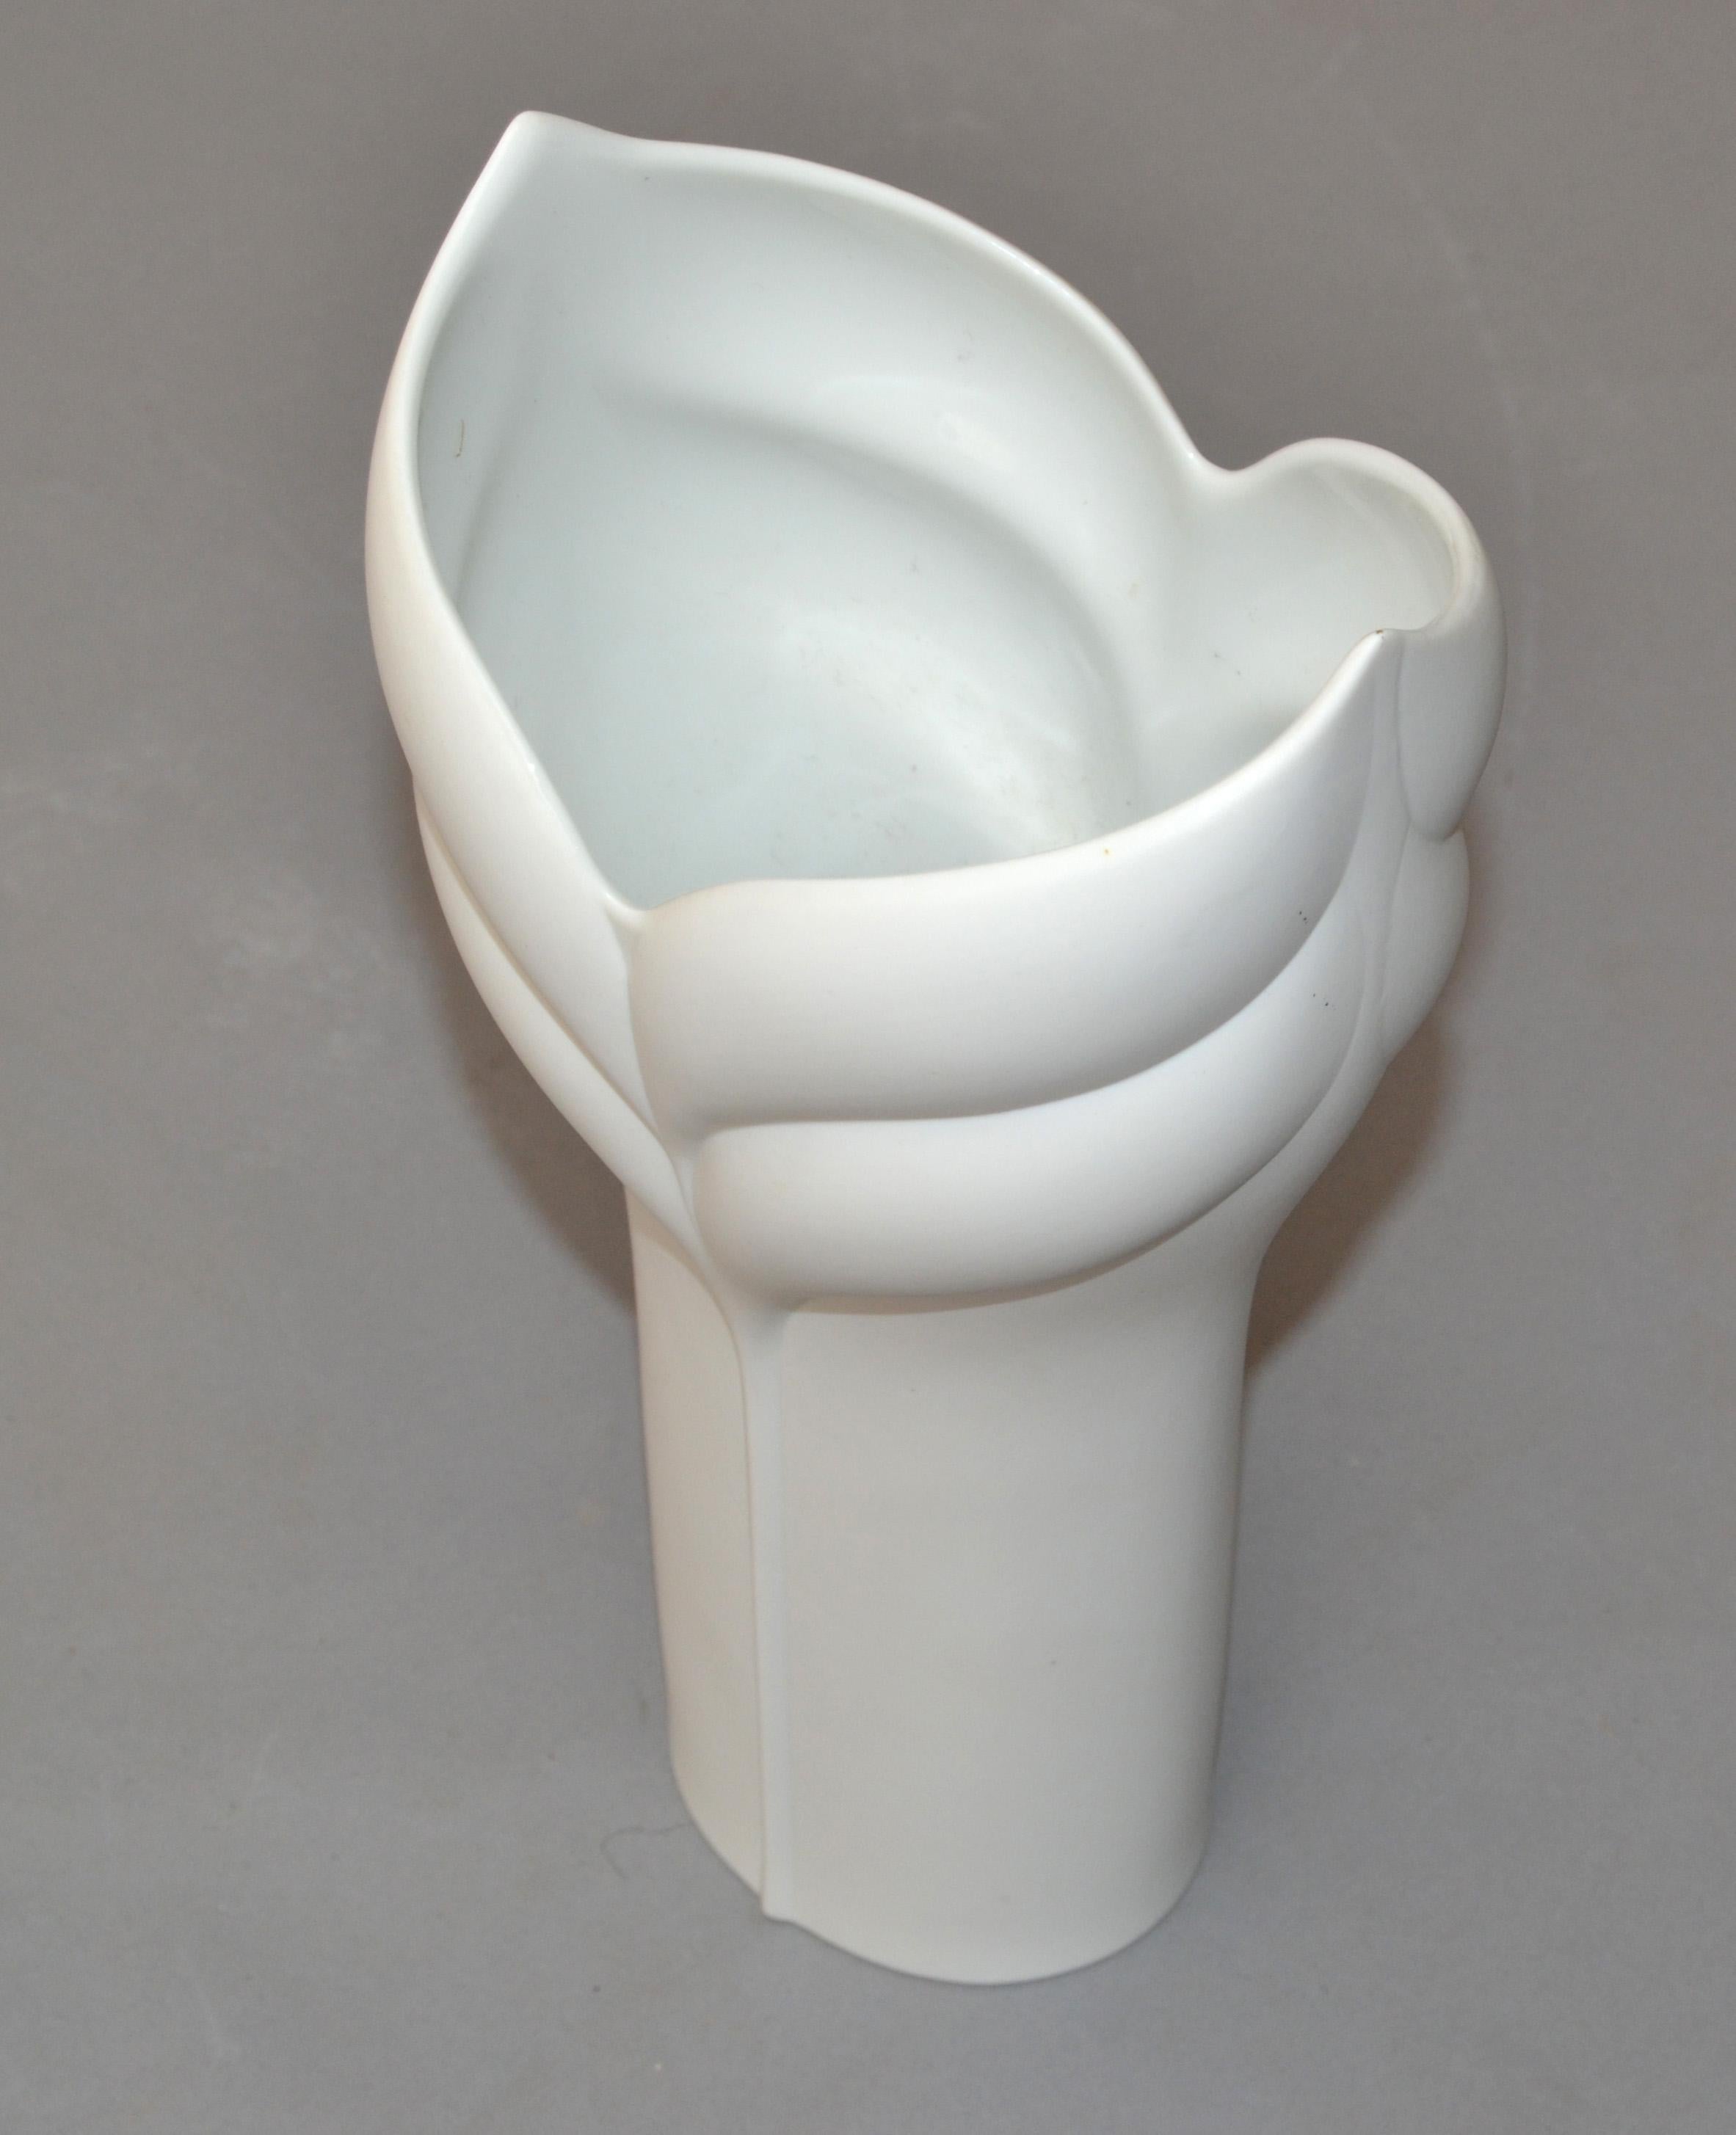 Porcelain Cala Lily Rosenthal White Bisque Flower Vase Studio-Linie Germany by Uta Feyl